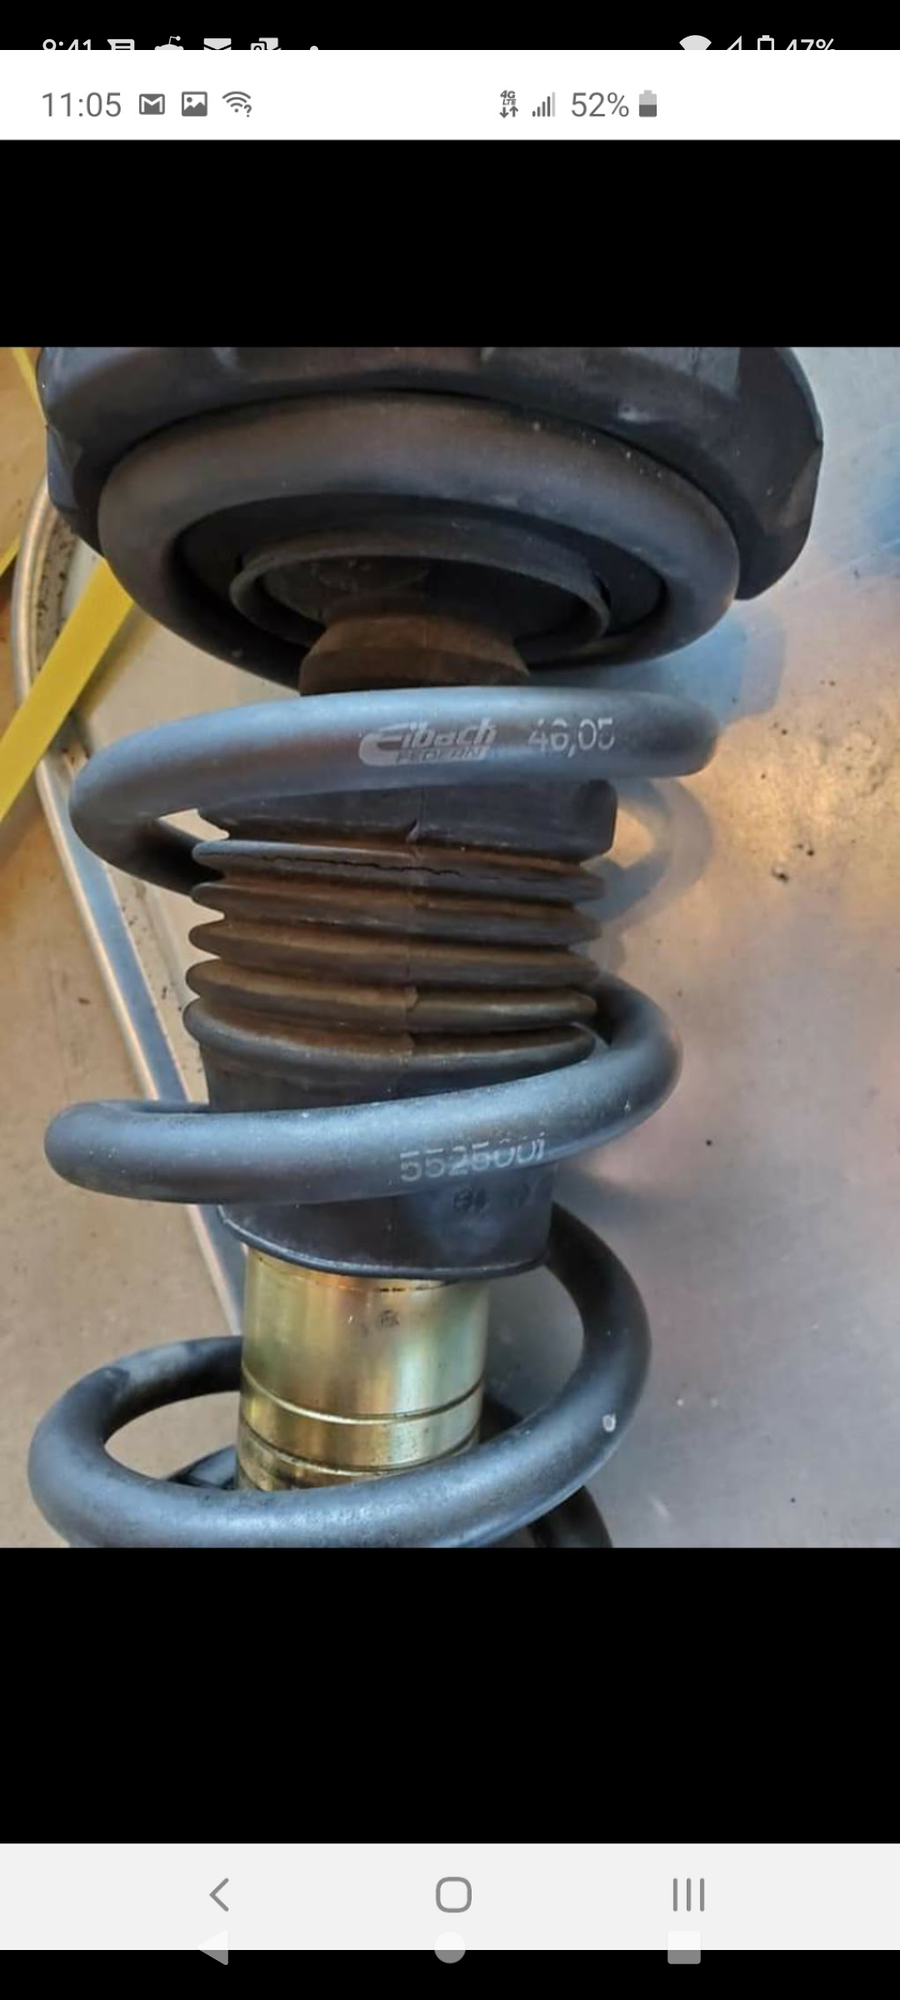 Steering/Suspension - Eibach pro kit springs 552-5002 - Used - 1993 to 1995 Mazda RX-7 - Houston, TX 77099, United States